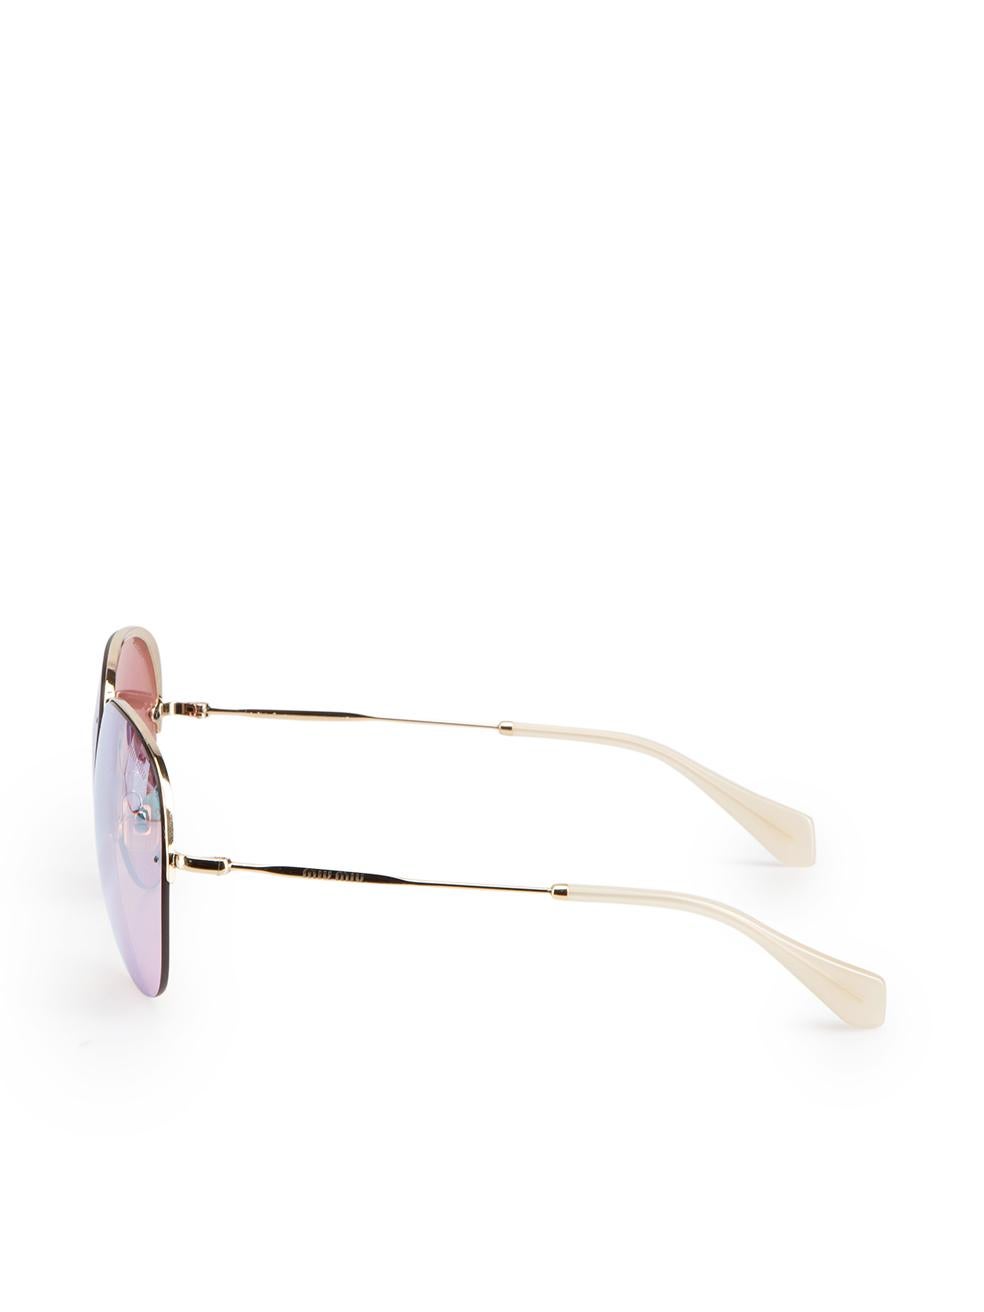 Women's Miu Miu Pink Mirrored Lens Aviator Sunglasses For Sale